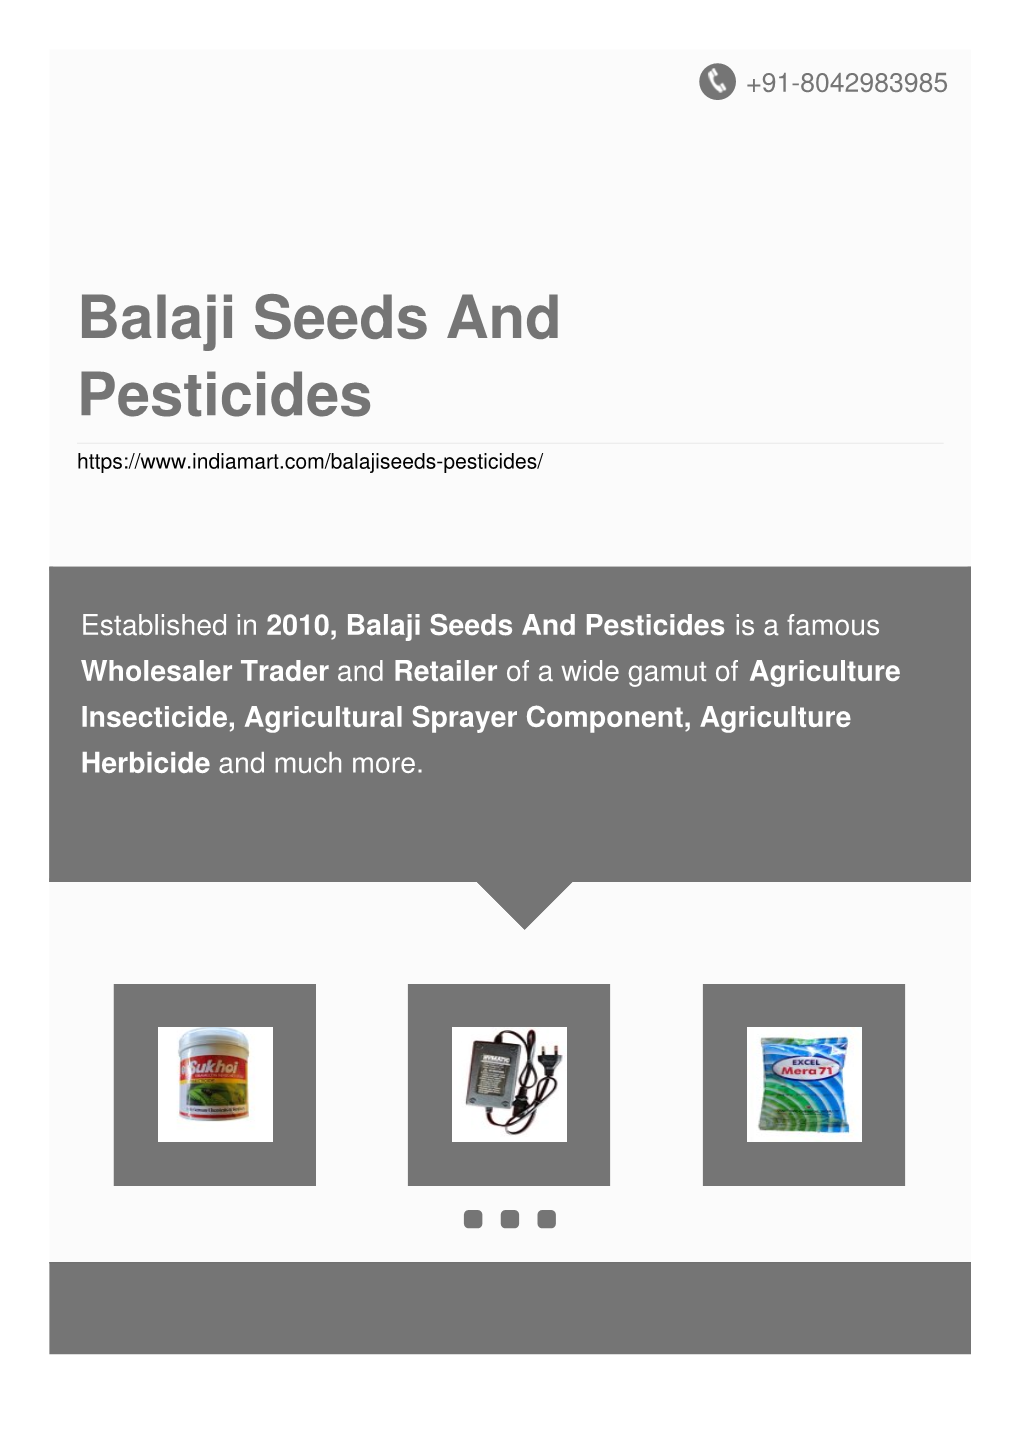 Balaji Seeds and Pesticides